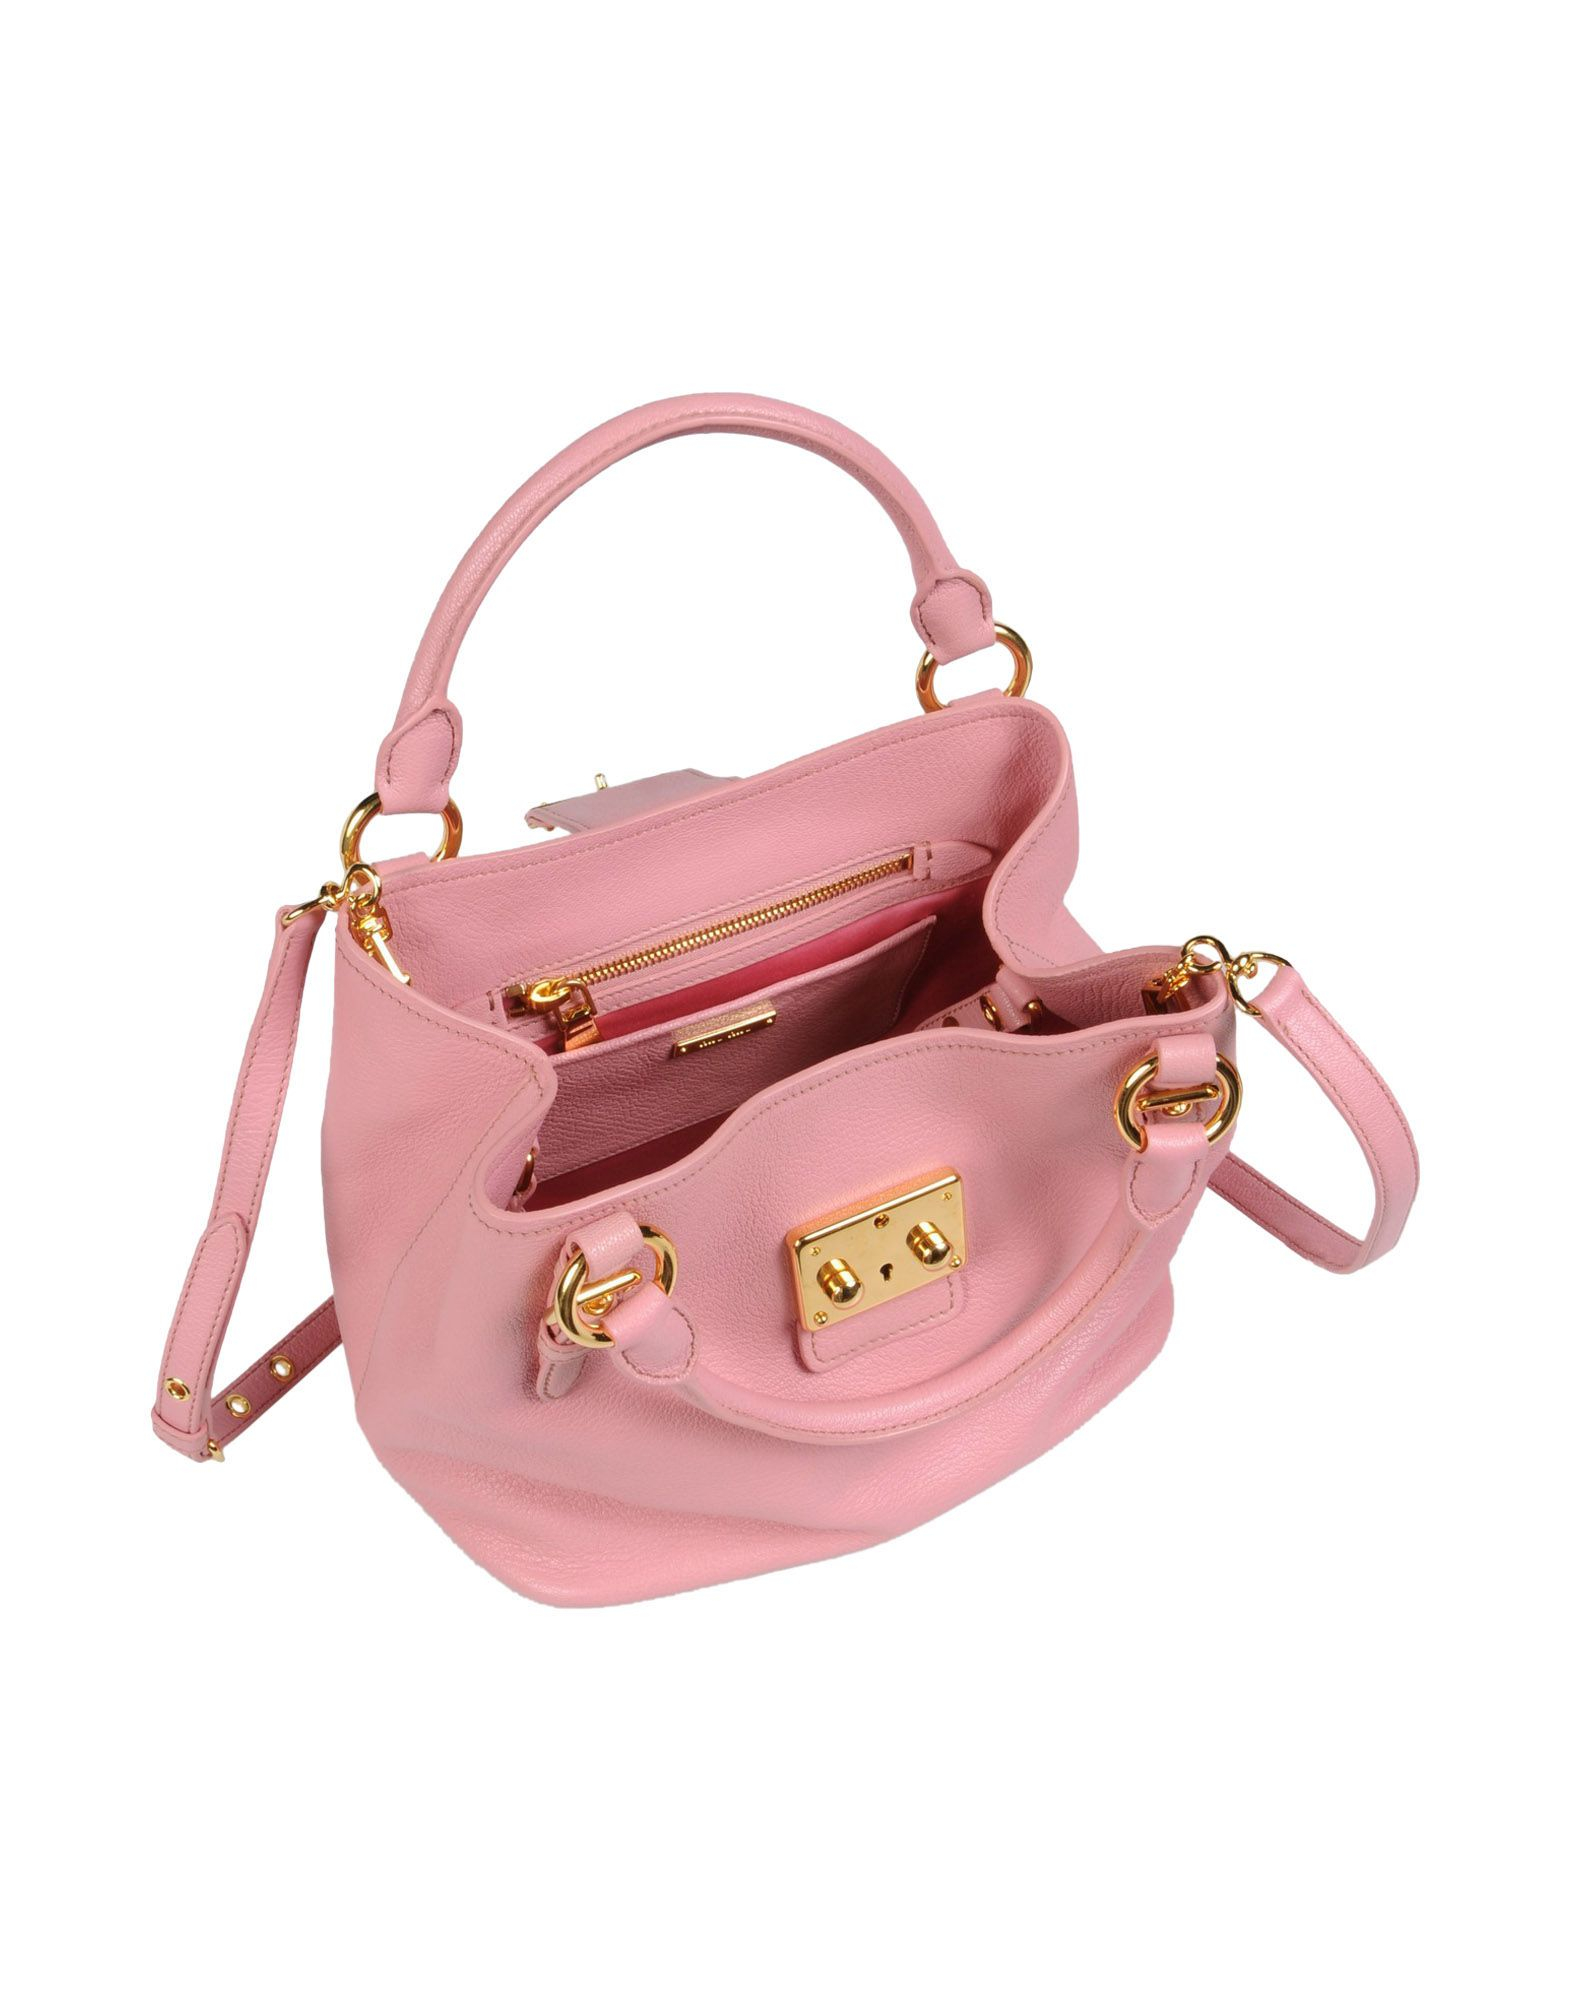 Miu miu Handbag in Pink | Lyst